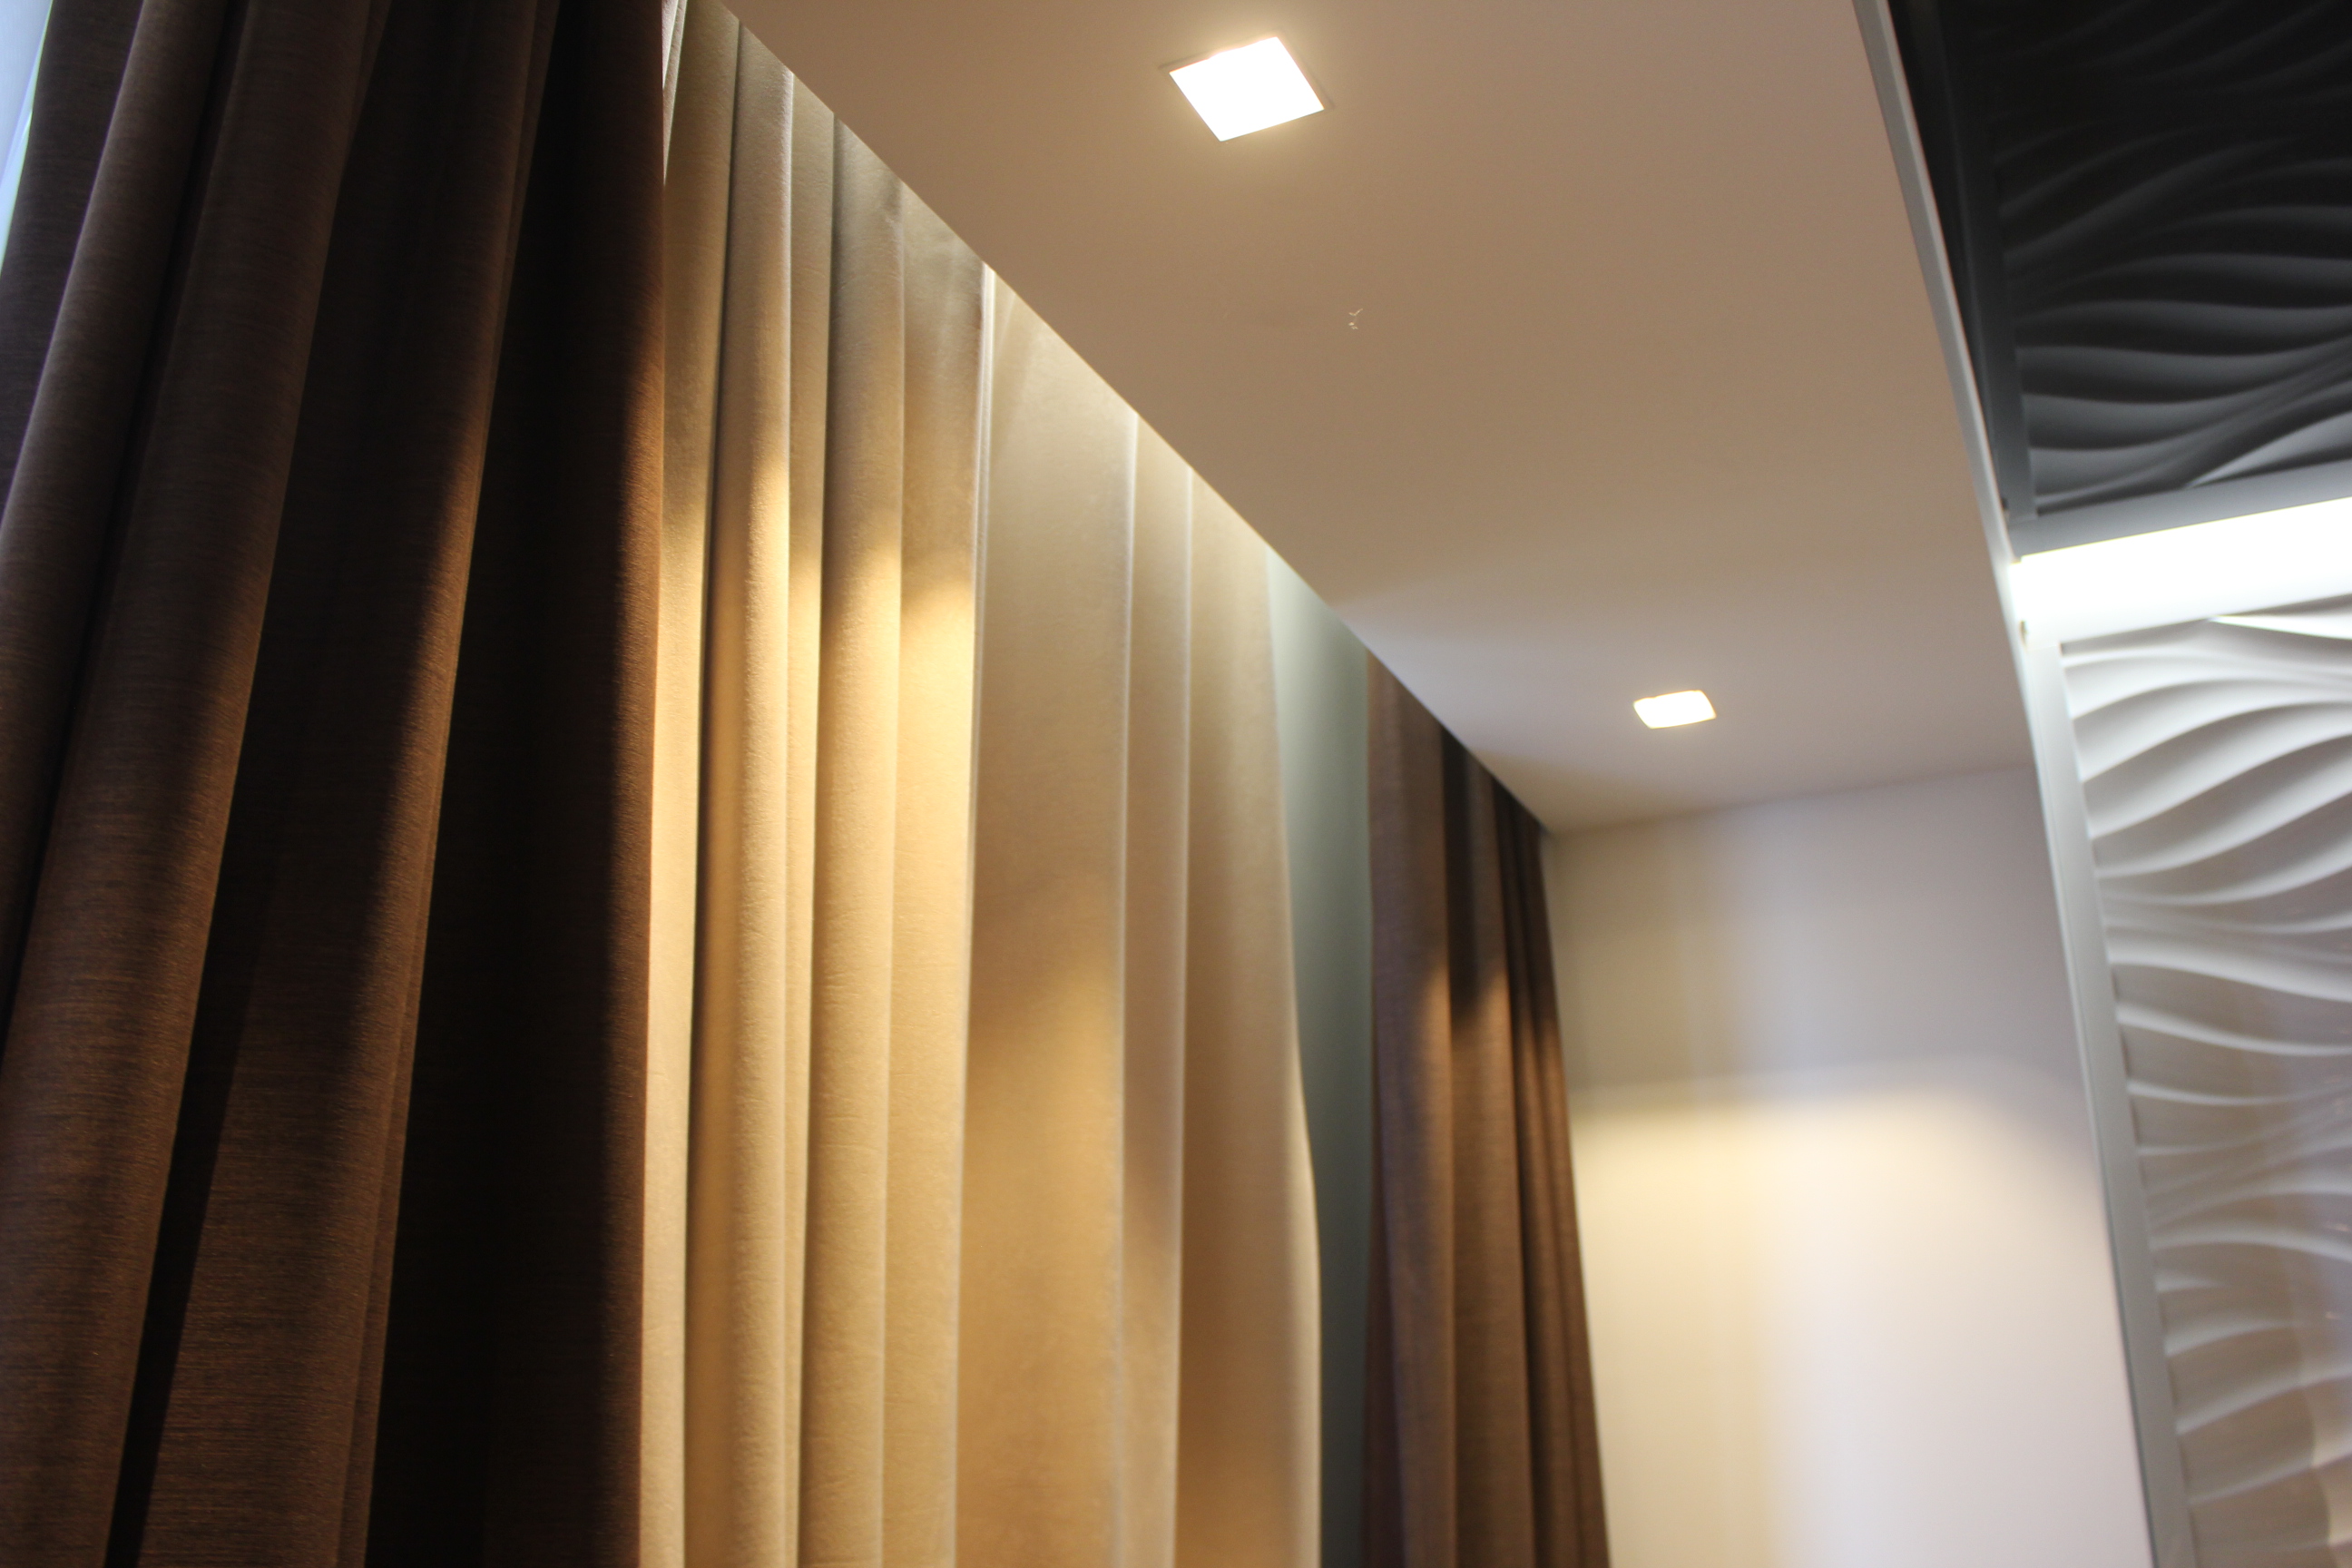 LED curtain lighting